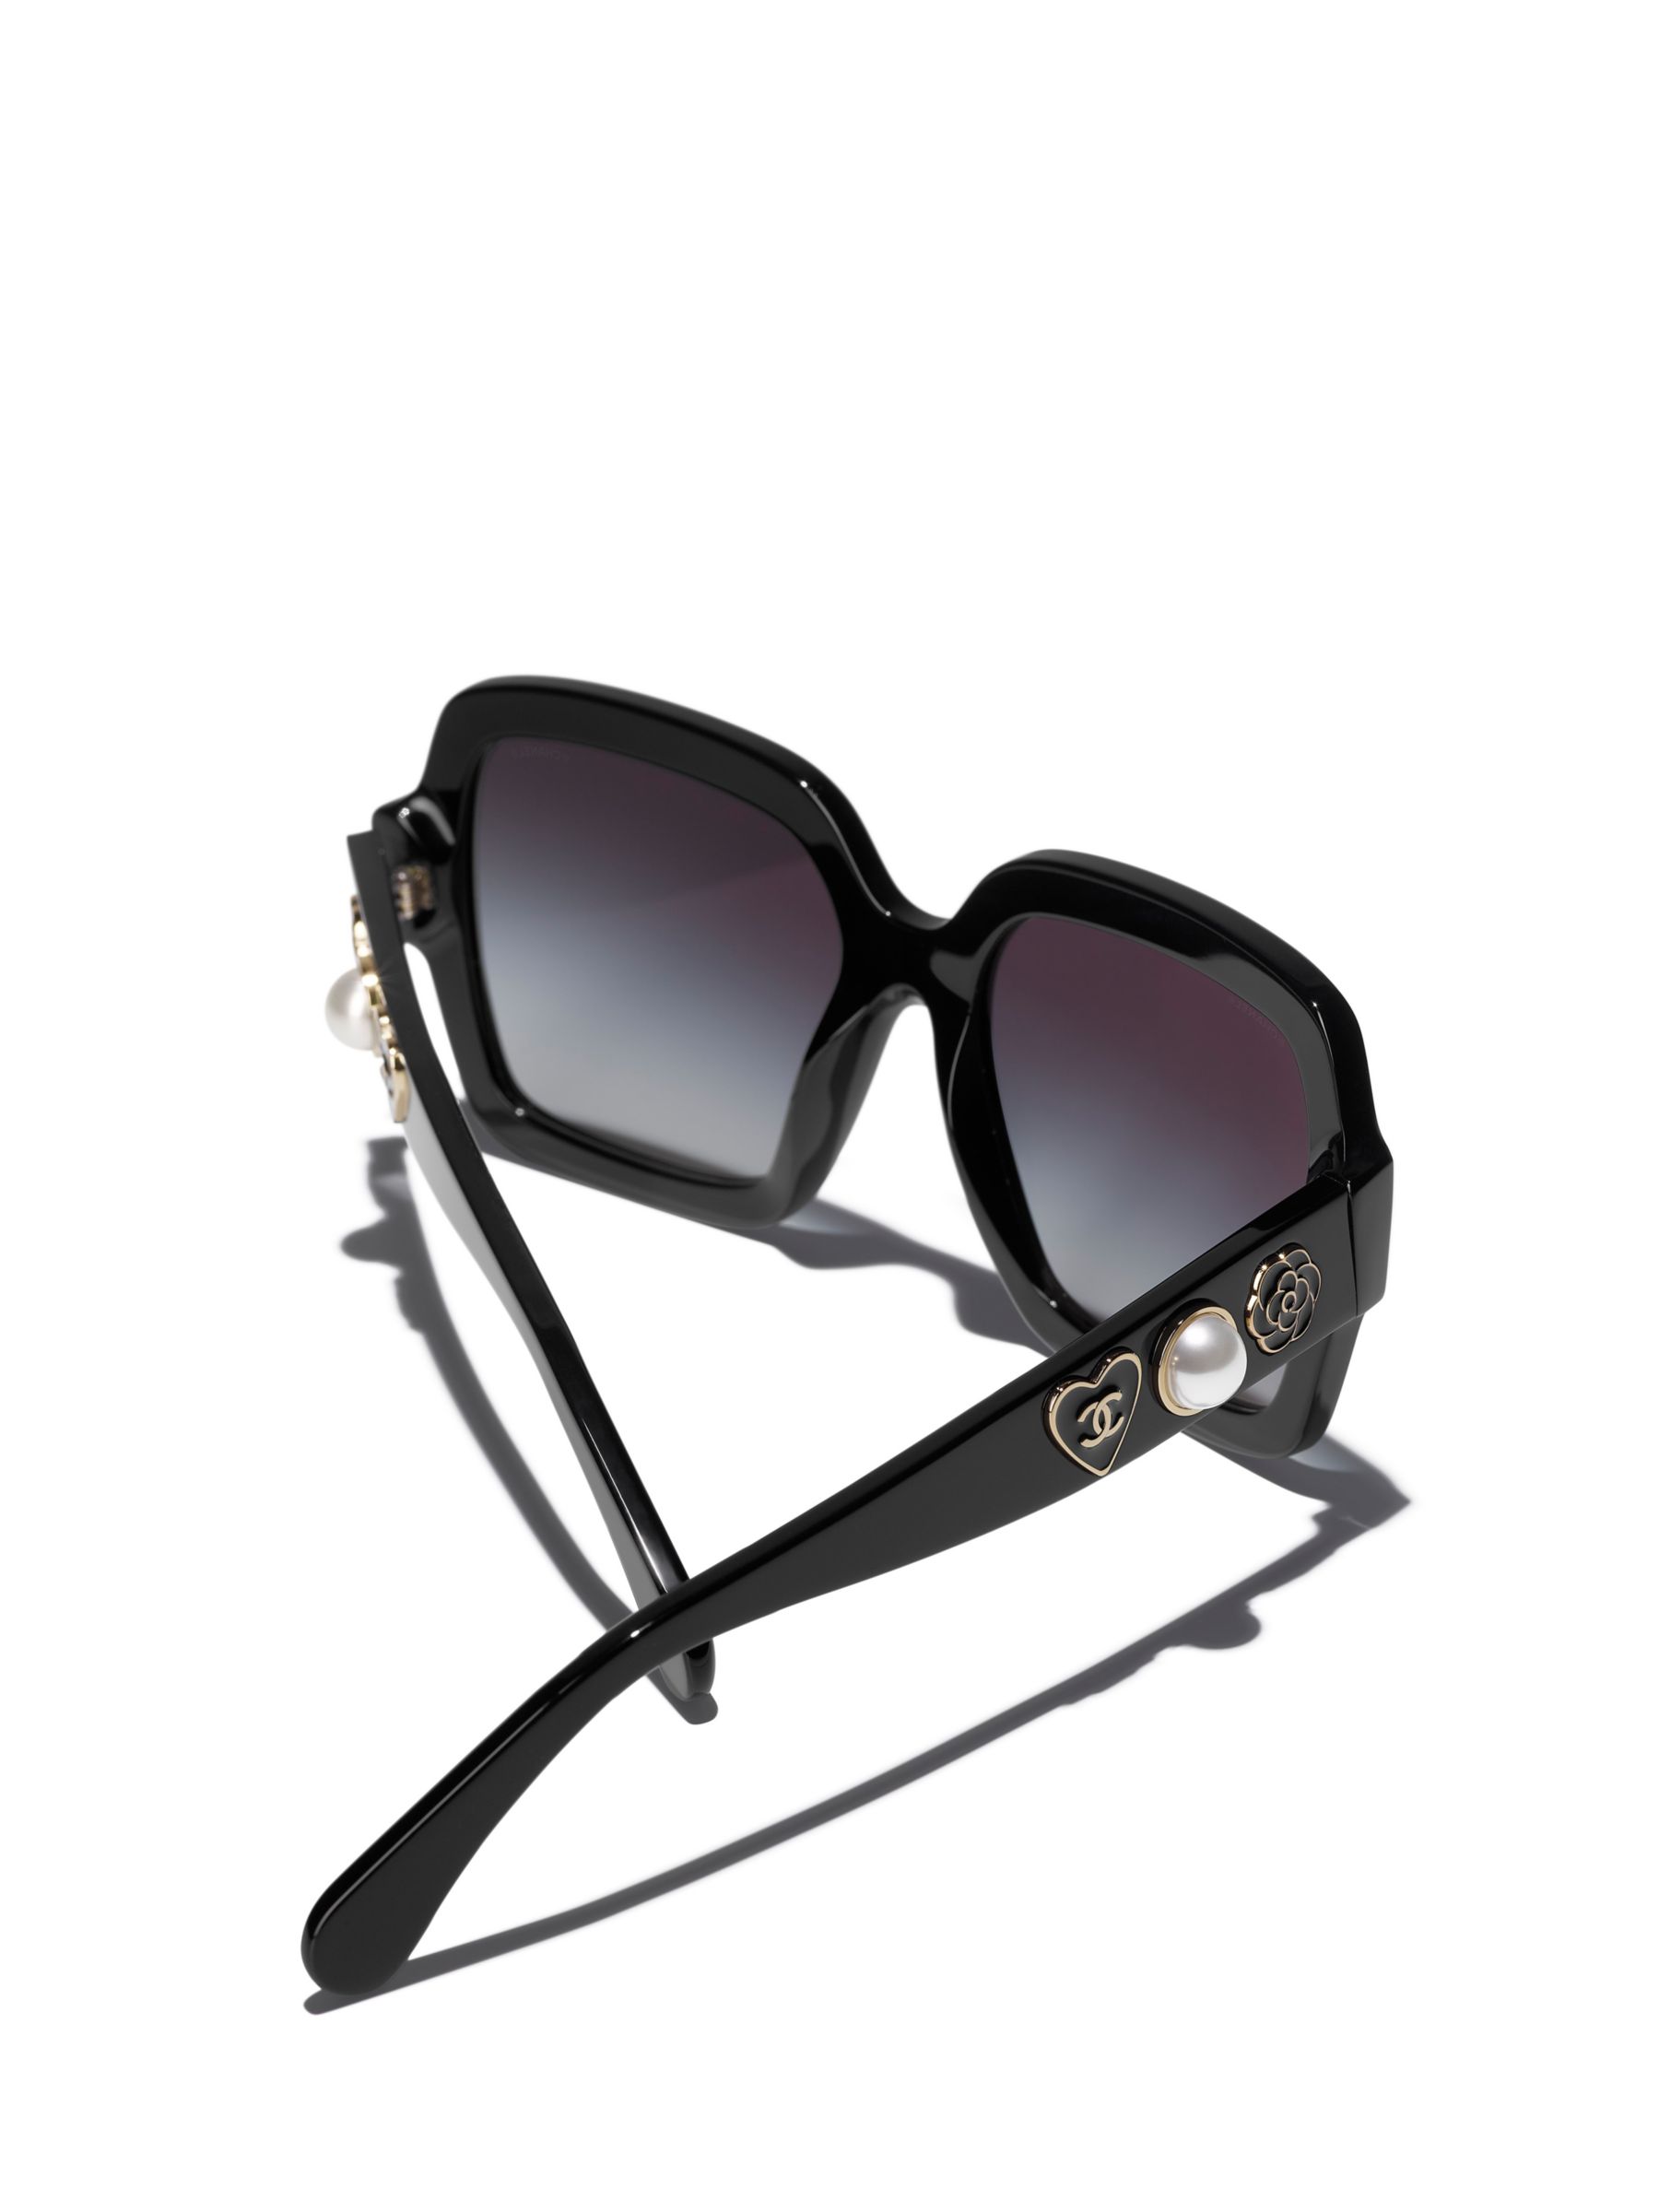 CHANEL CH5479 Women's Square Sunglasses, Black/Grey at John Lewis